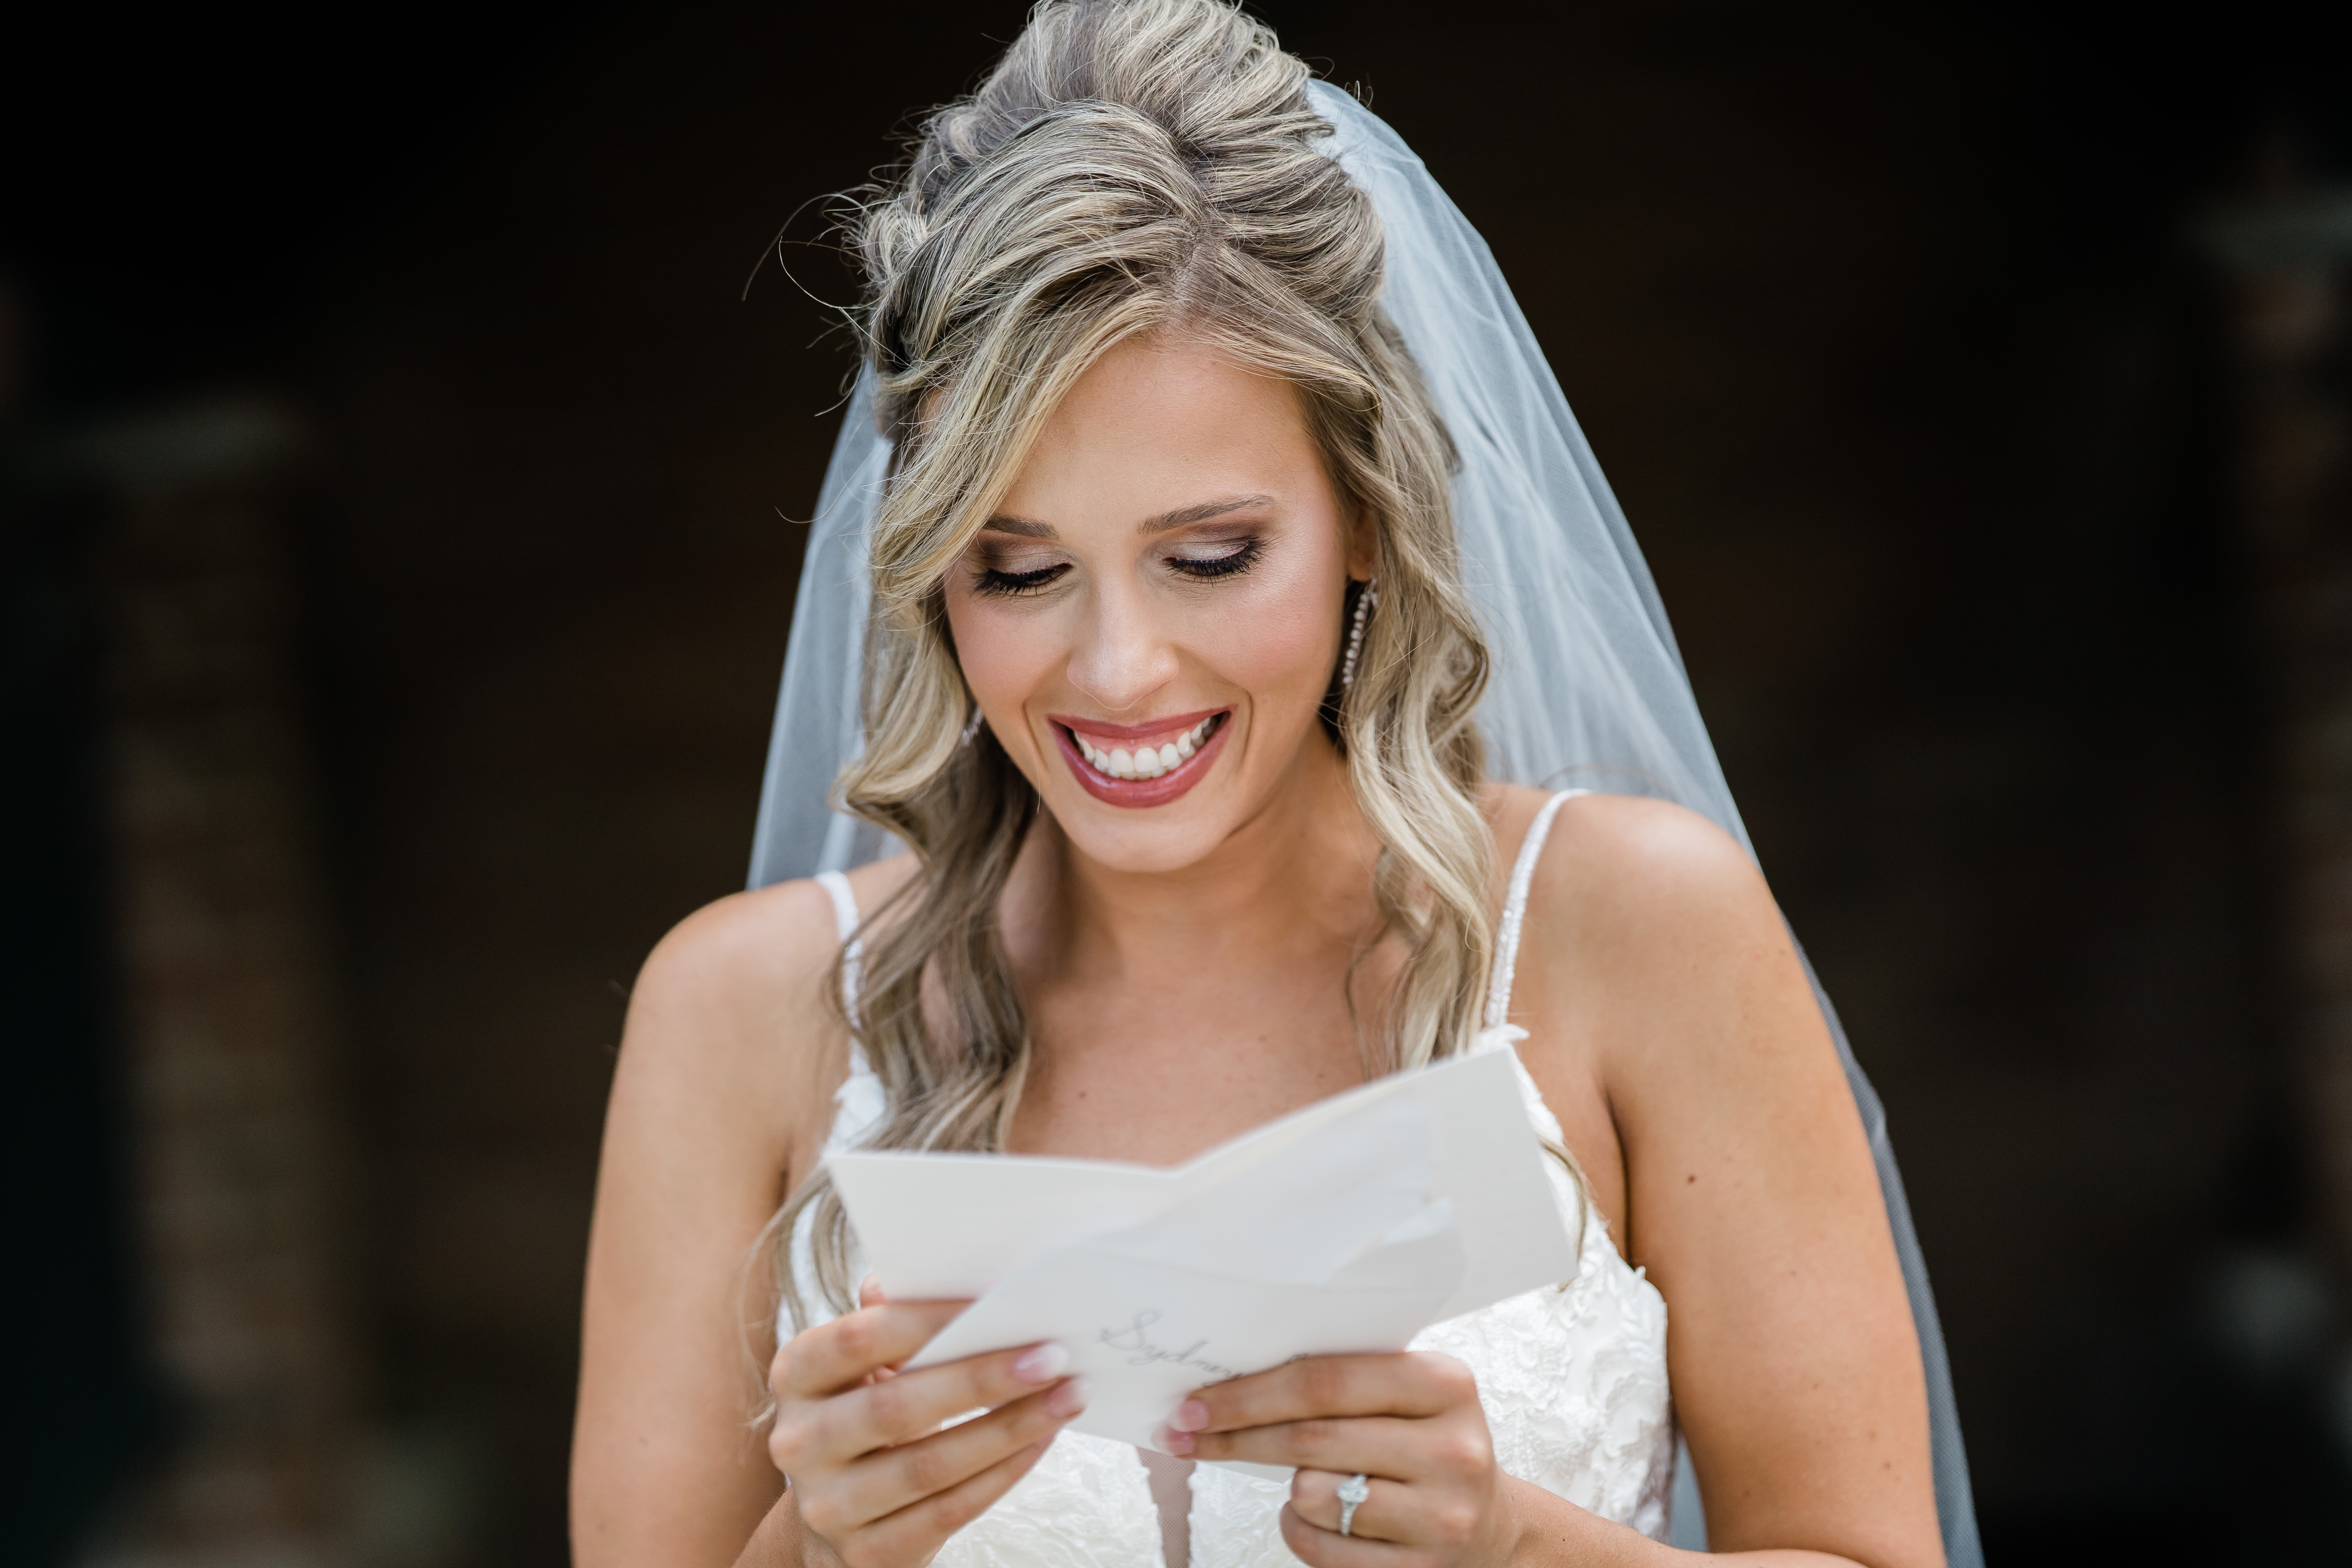 Fort wayne wedding photographers capture bride smiling reading letter